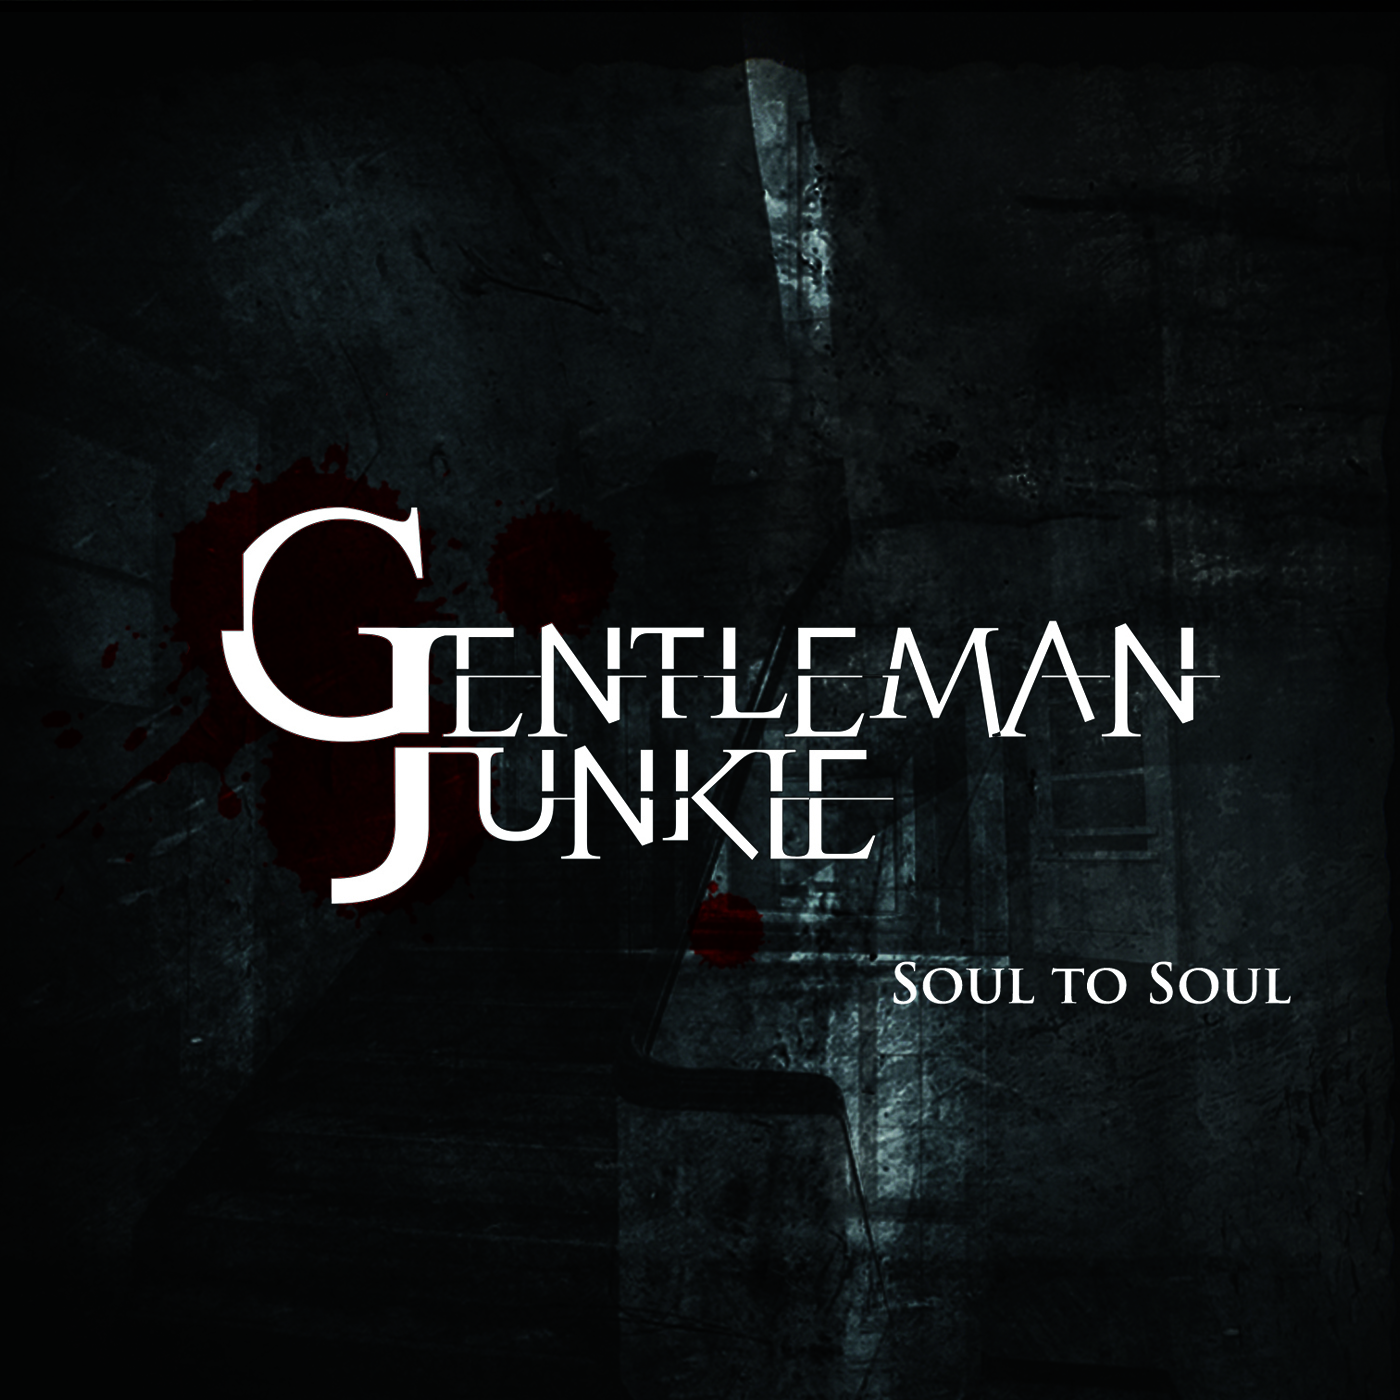 Gentleman Junkie – Soul to Soul